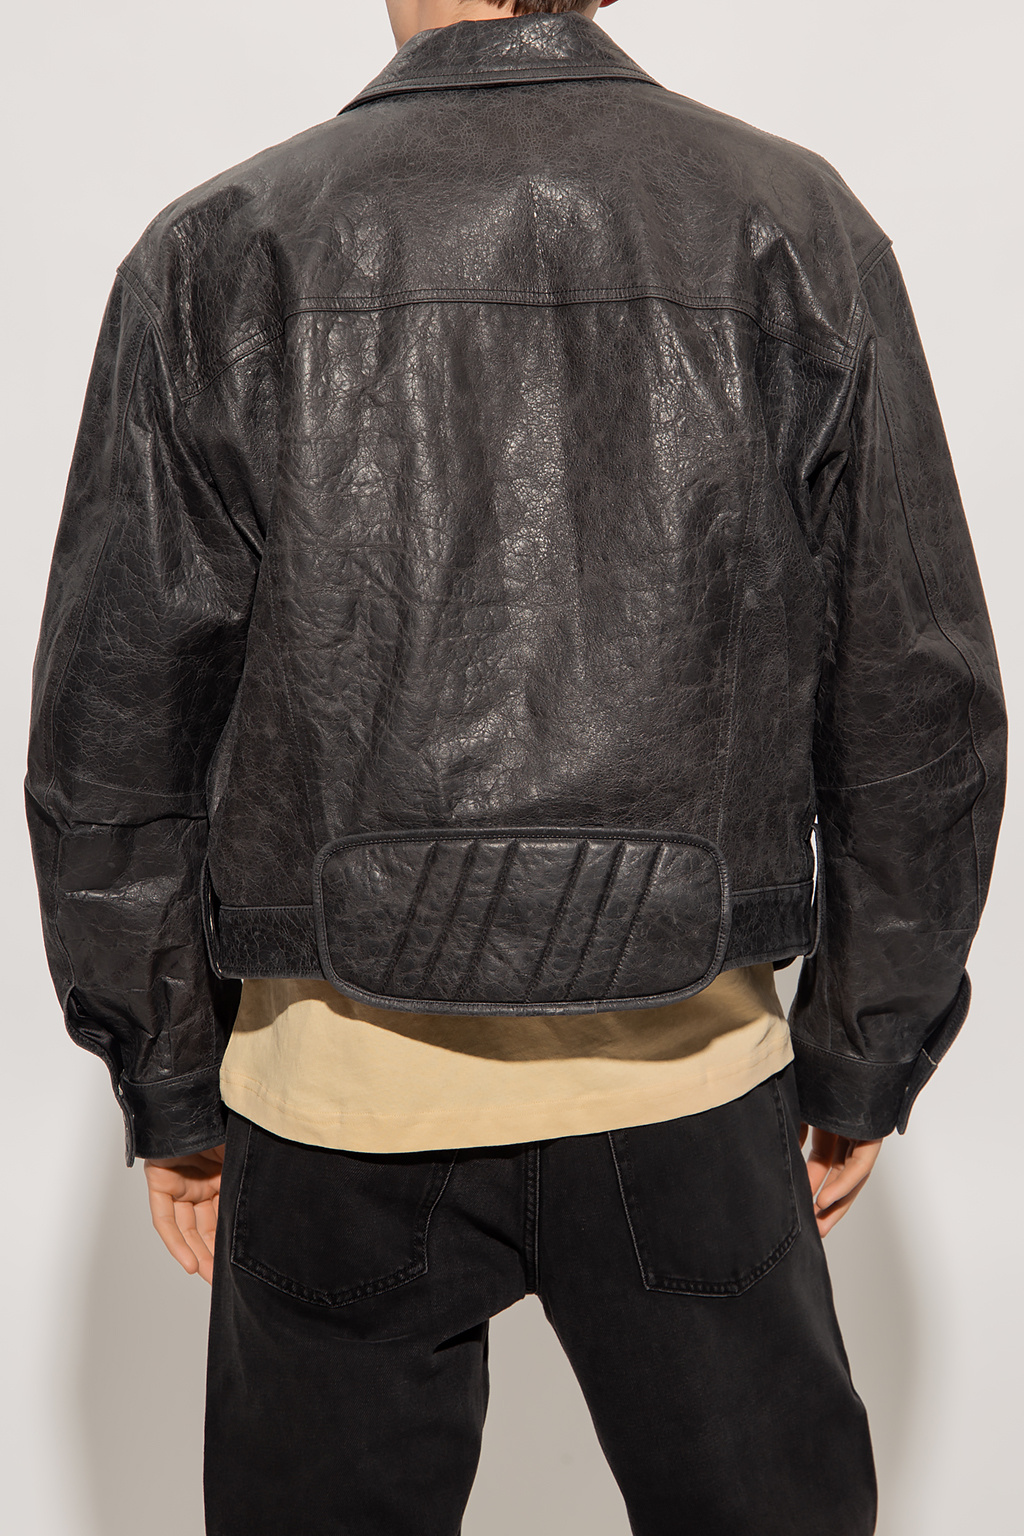 Diesel ‘L-Martin’ leather jacket | Men's Clothing | Vitkac